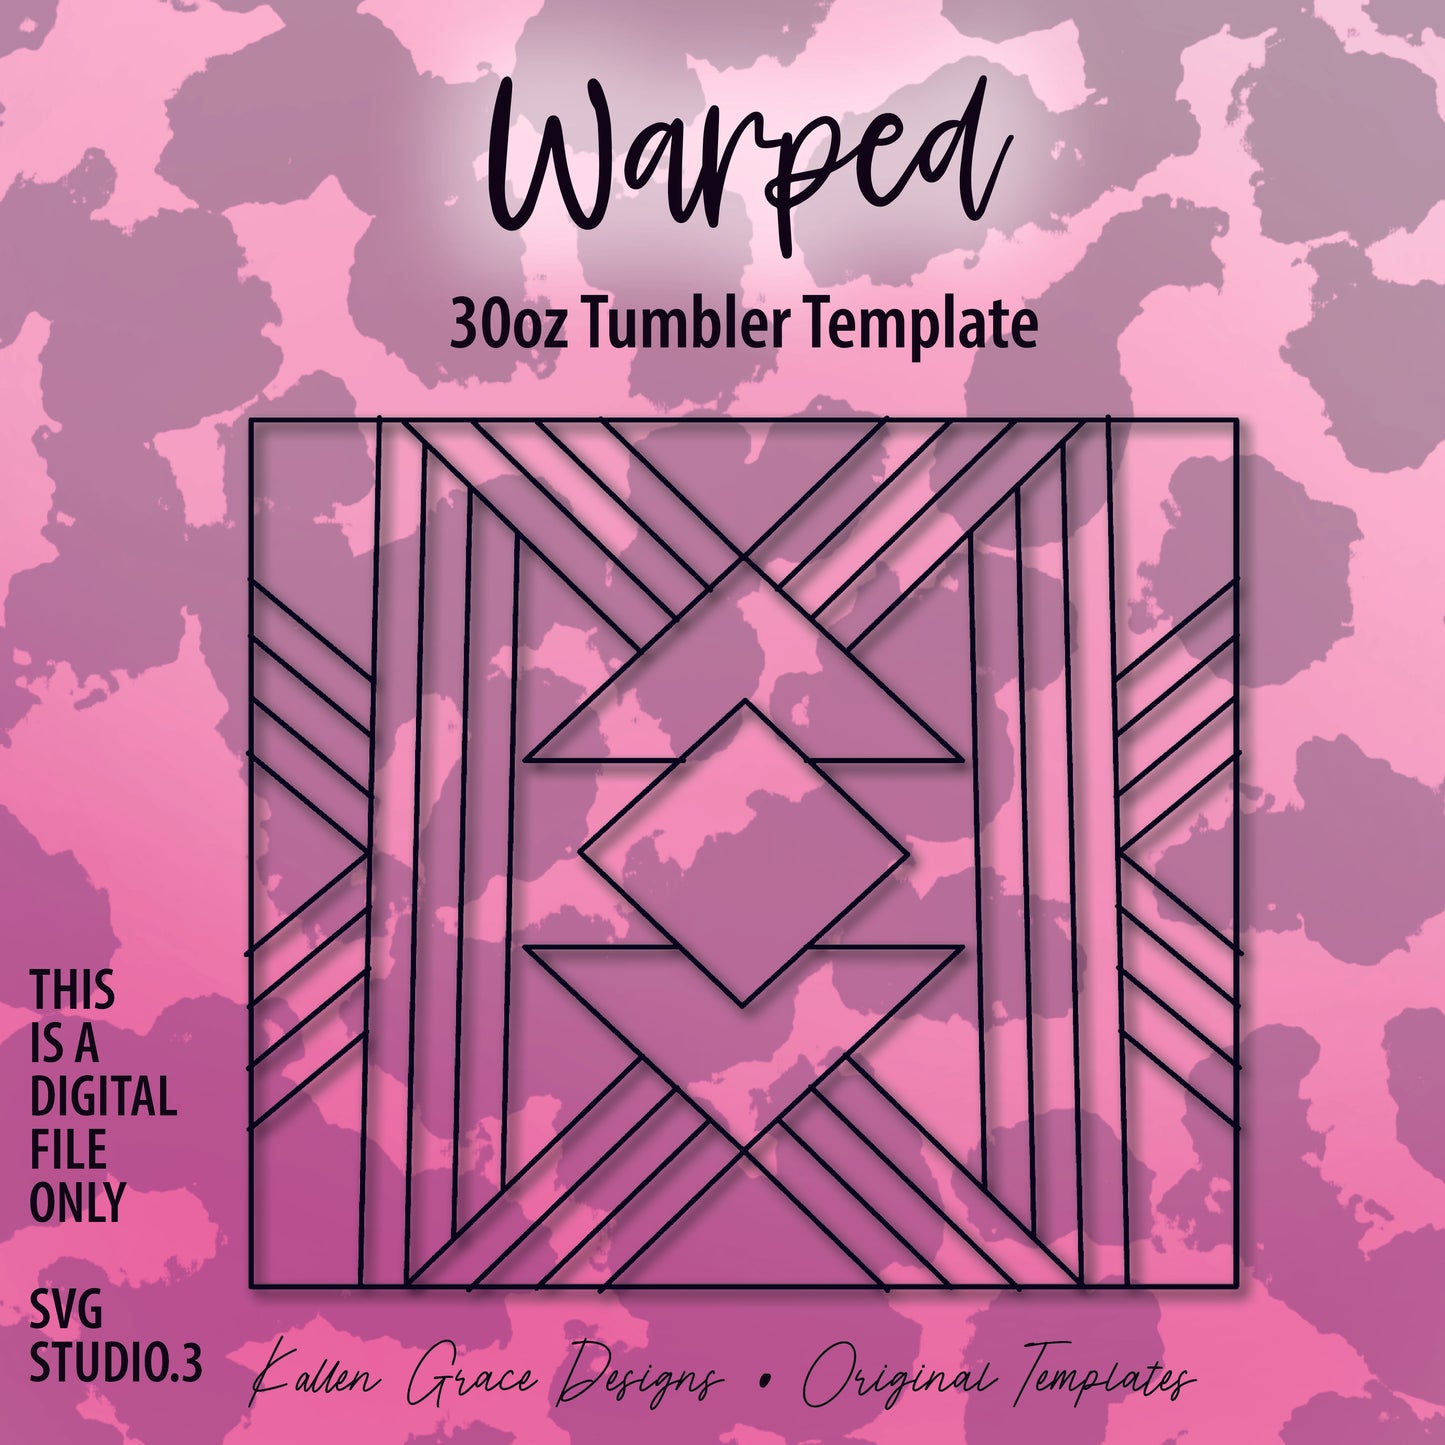 30oz Warped Tumbler Template